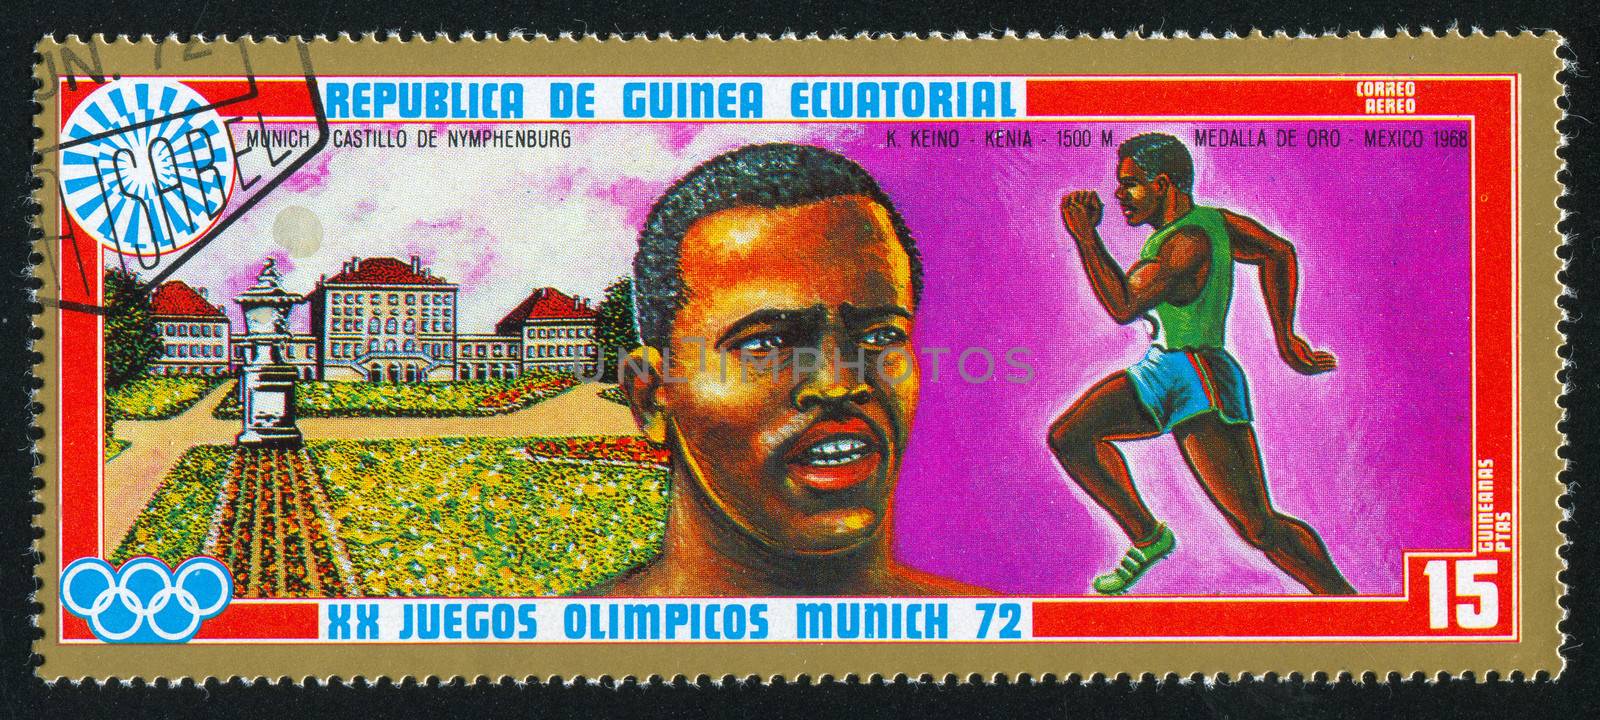 EQUATORIAL GUINEA - CIRCA 1972: stamp printed by Equatorial Guinea, shows Running and Nymphenburg Palace, circa 1972